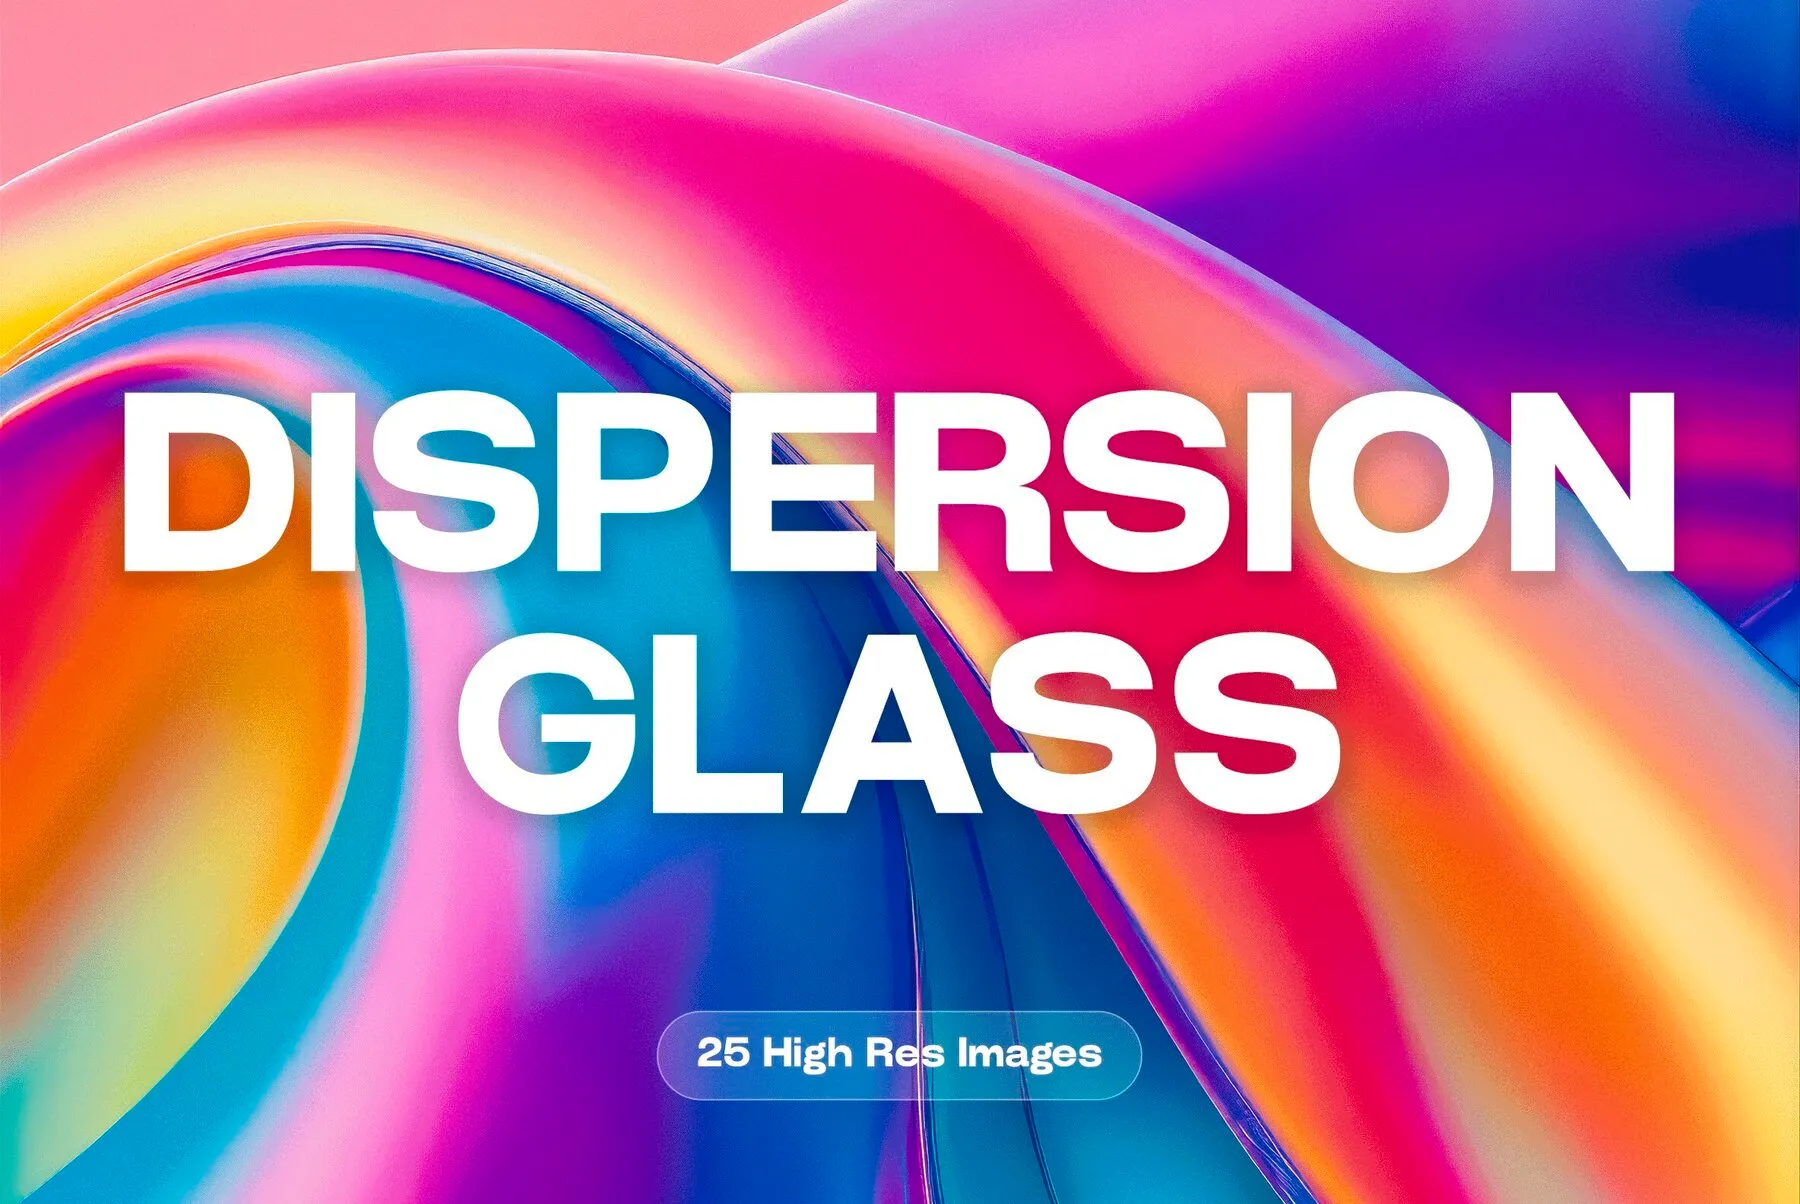 Dispersion Glass